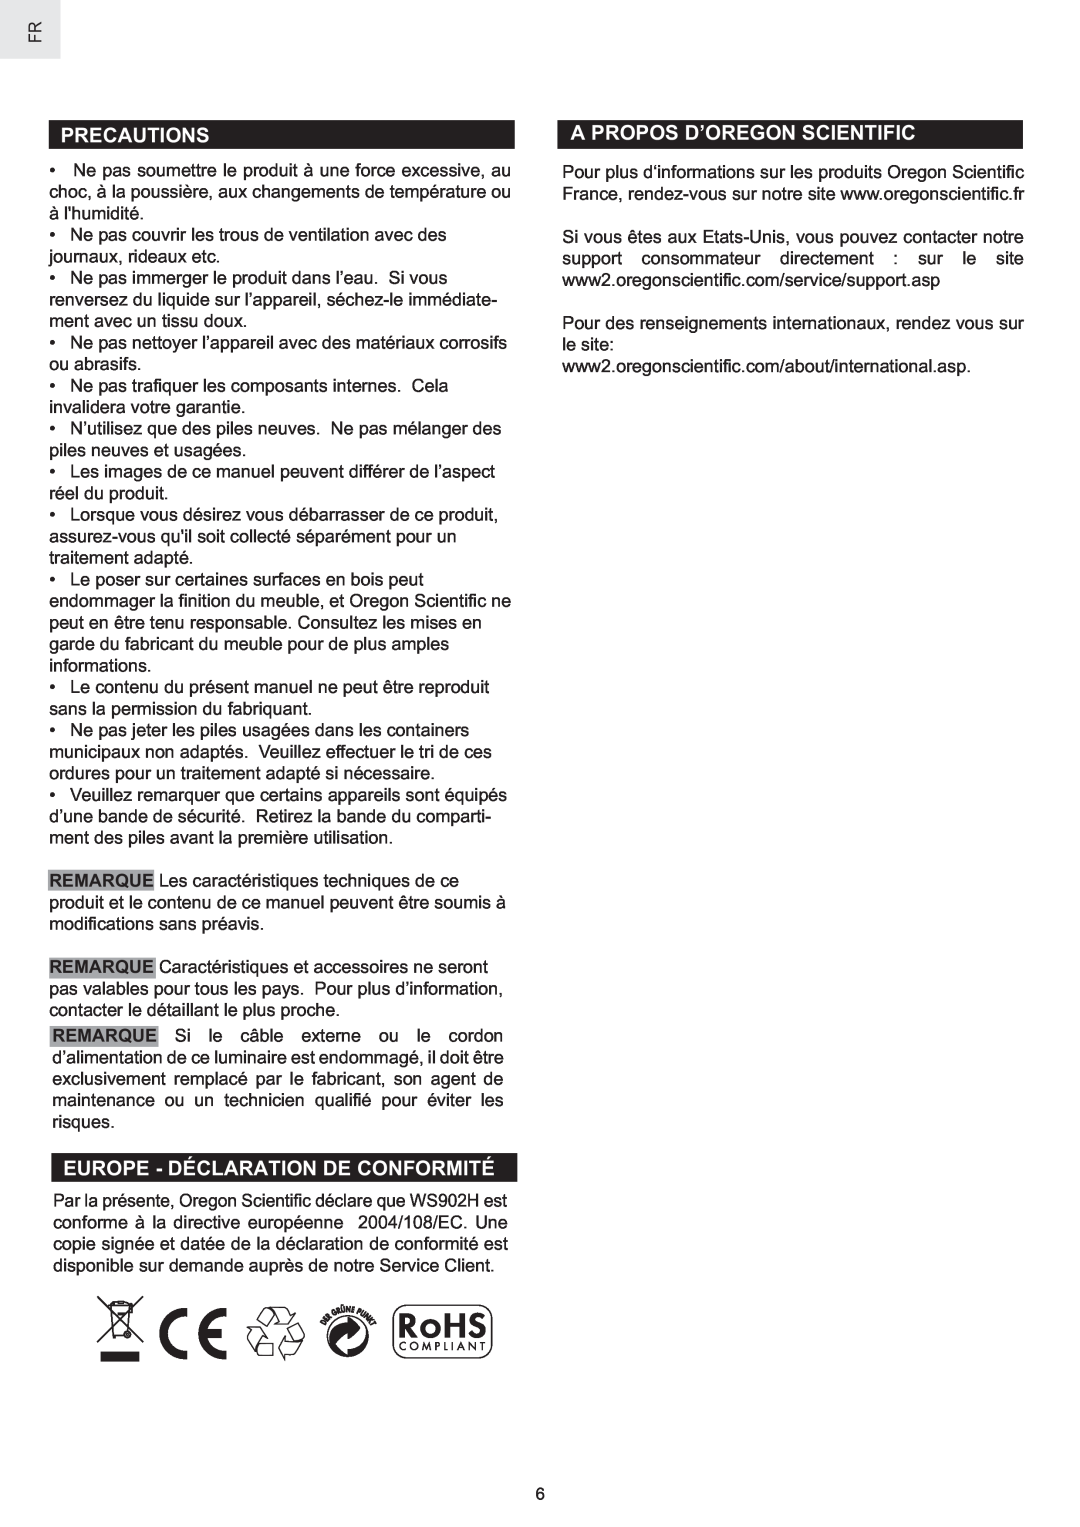 Oregon Scientific WS902H user manual Precautions, Europe - Déclaration De Conformité, A Propos D’Oregon Scientific 